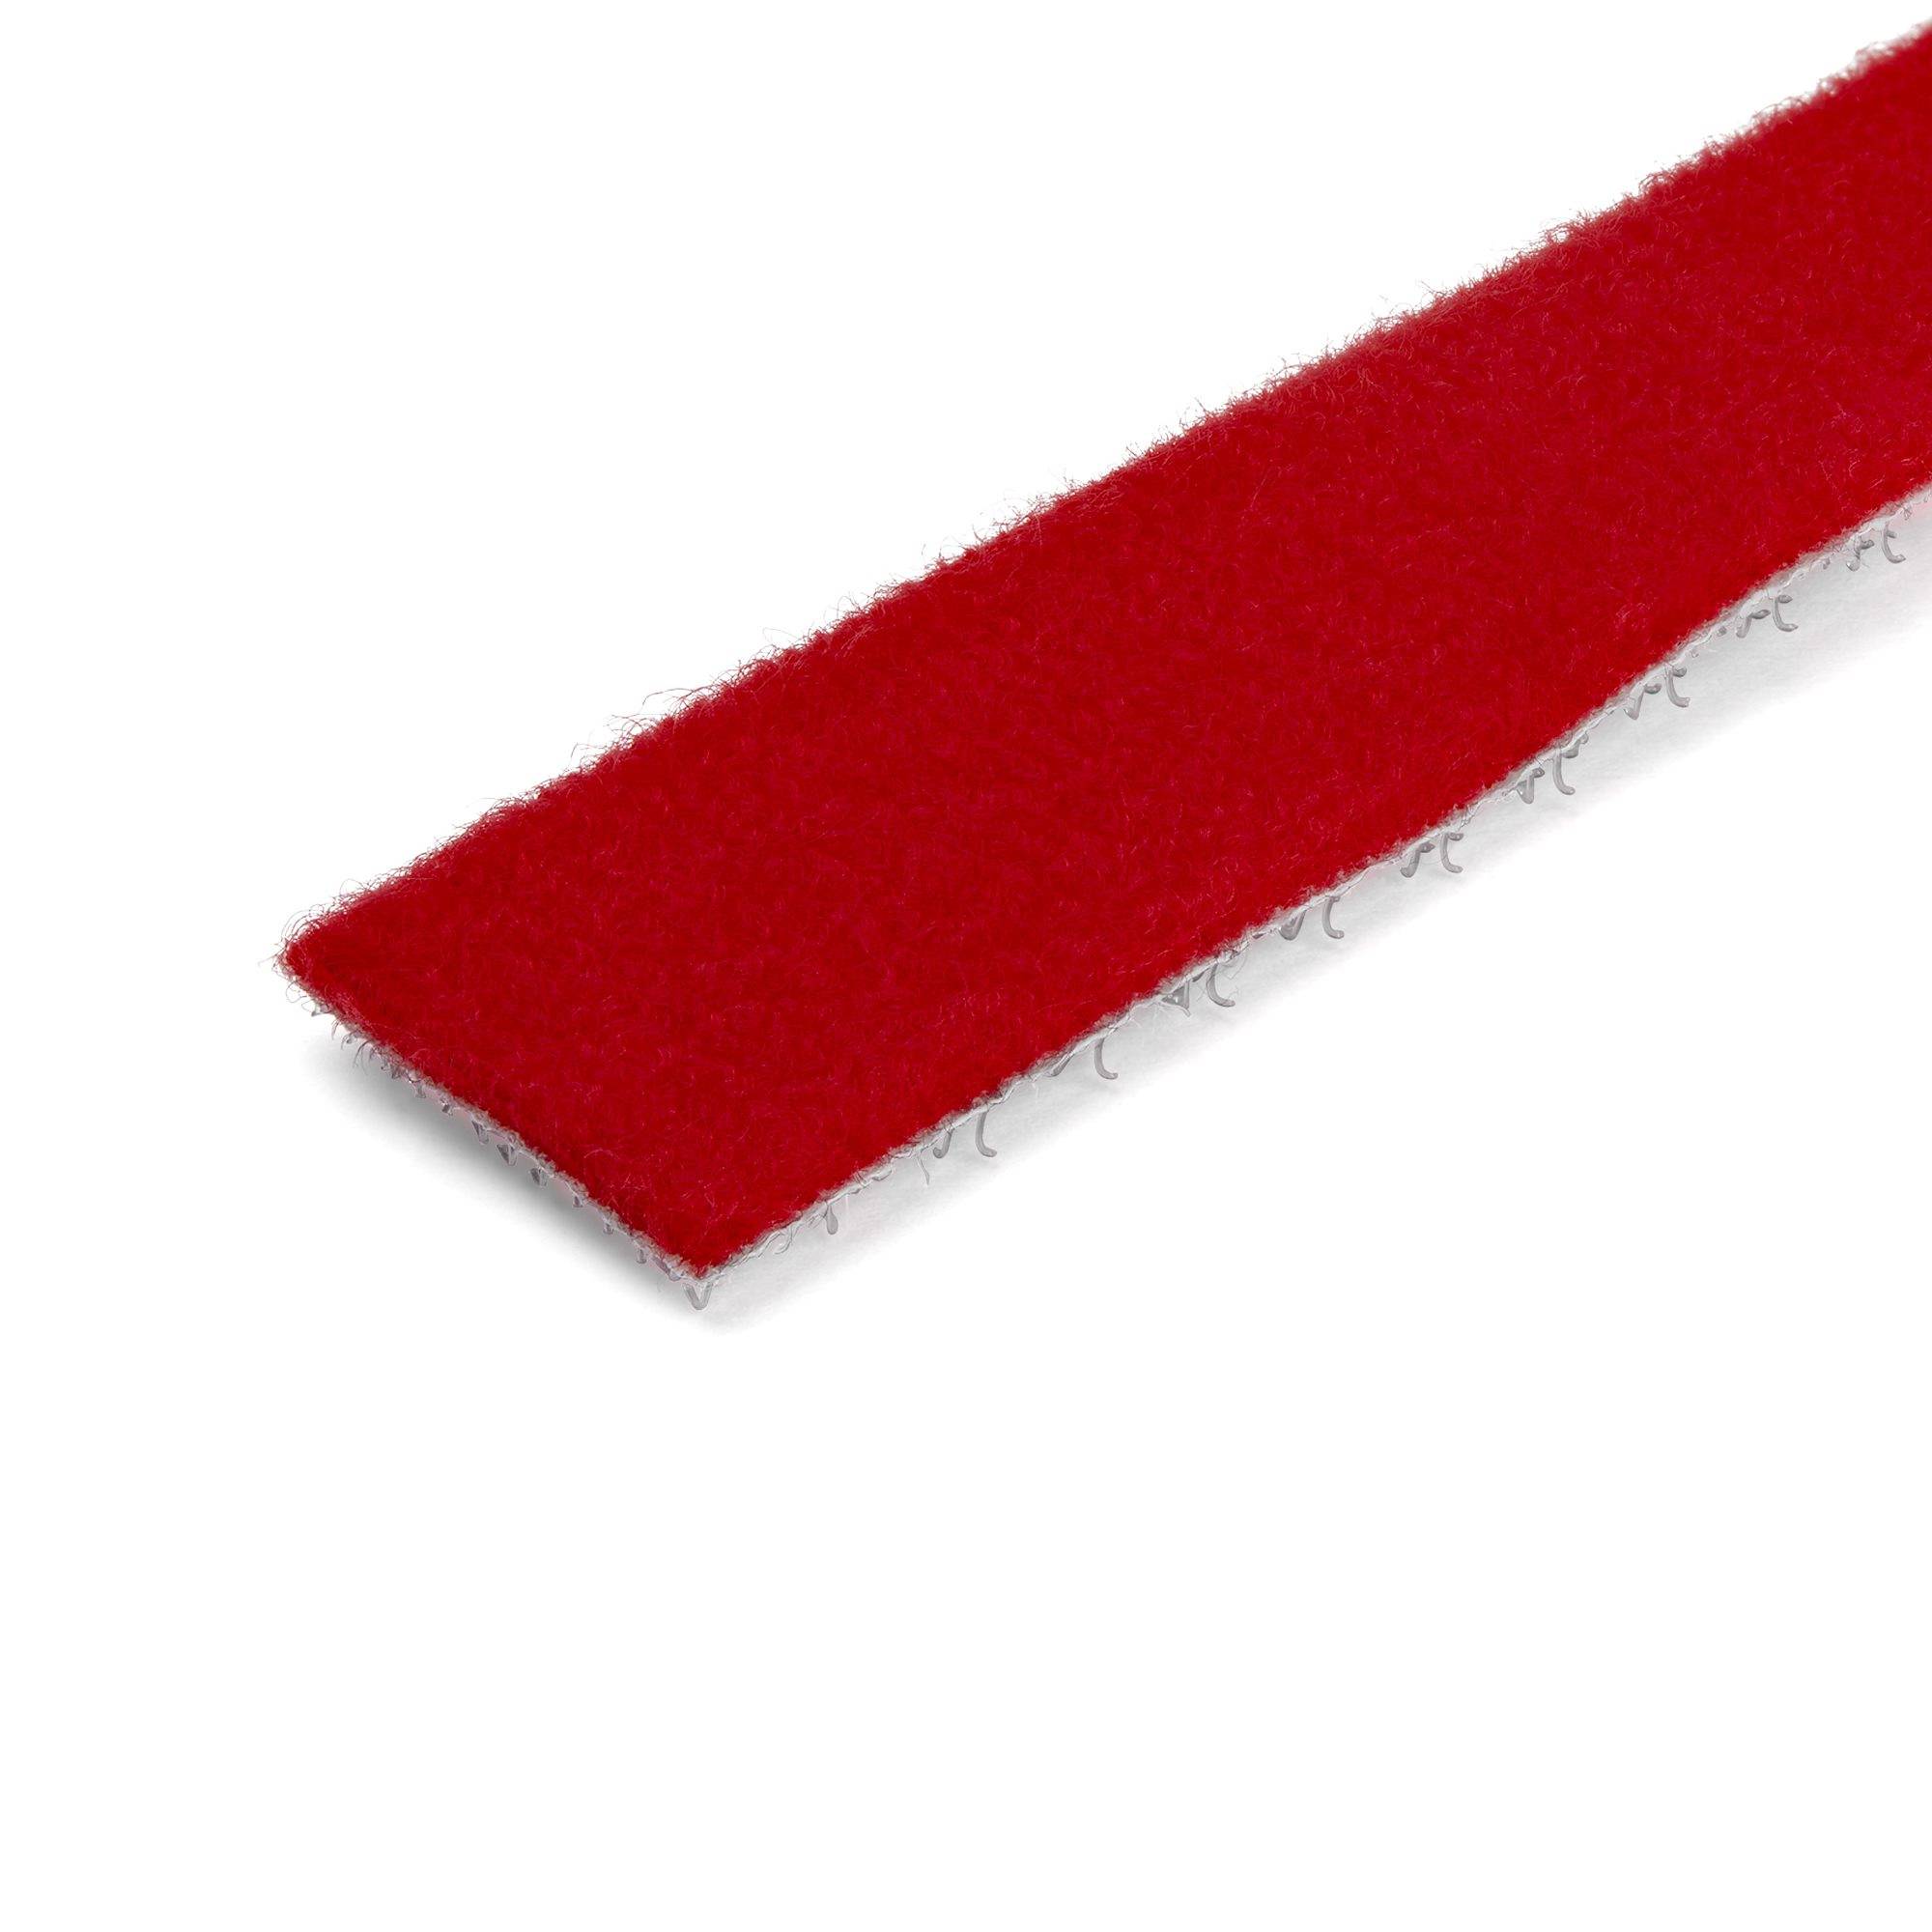 Rca Informatique - image du produit : 25FT. HOOK AND LOOP ROLL - RED - RESUABLE